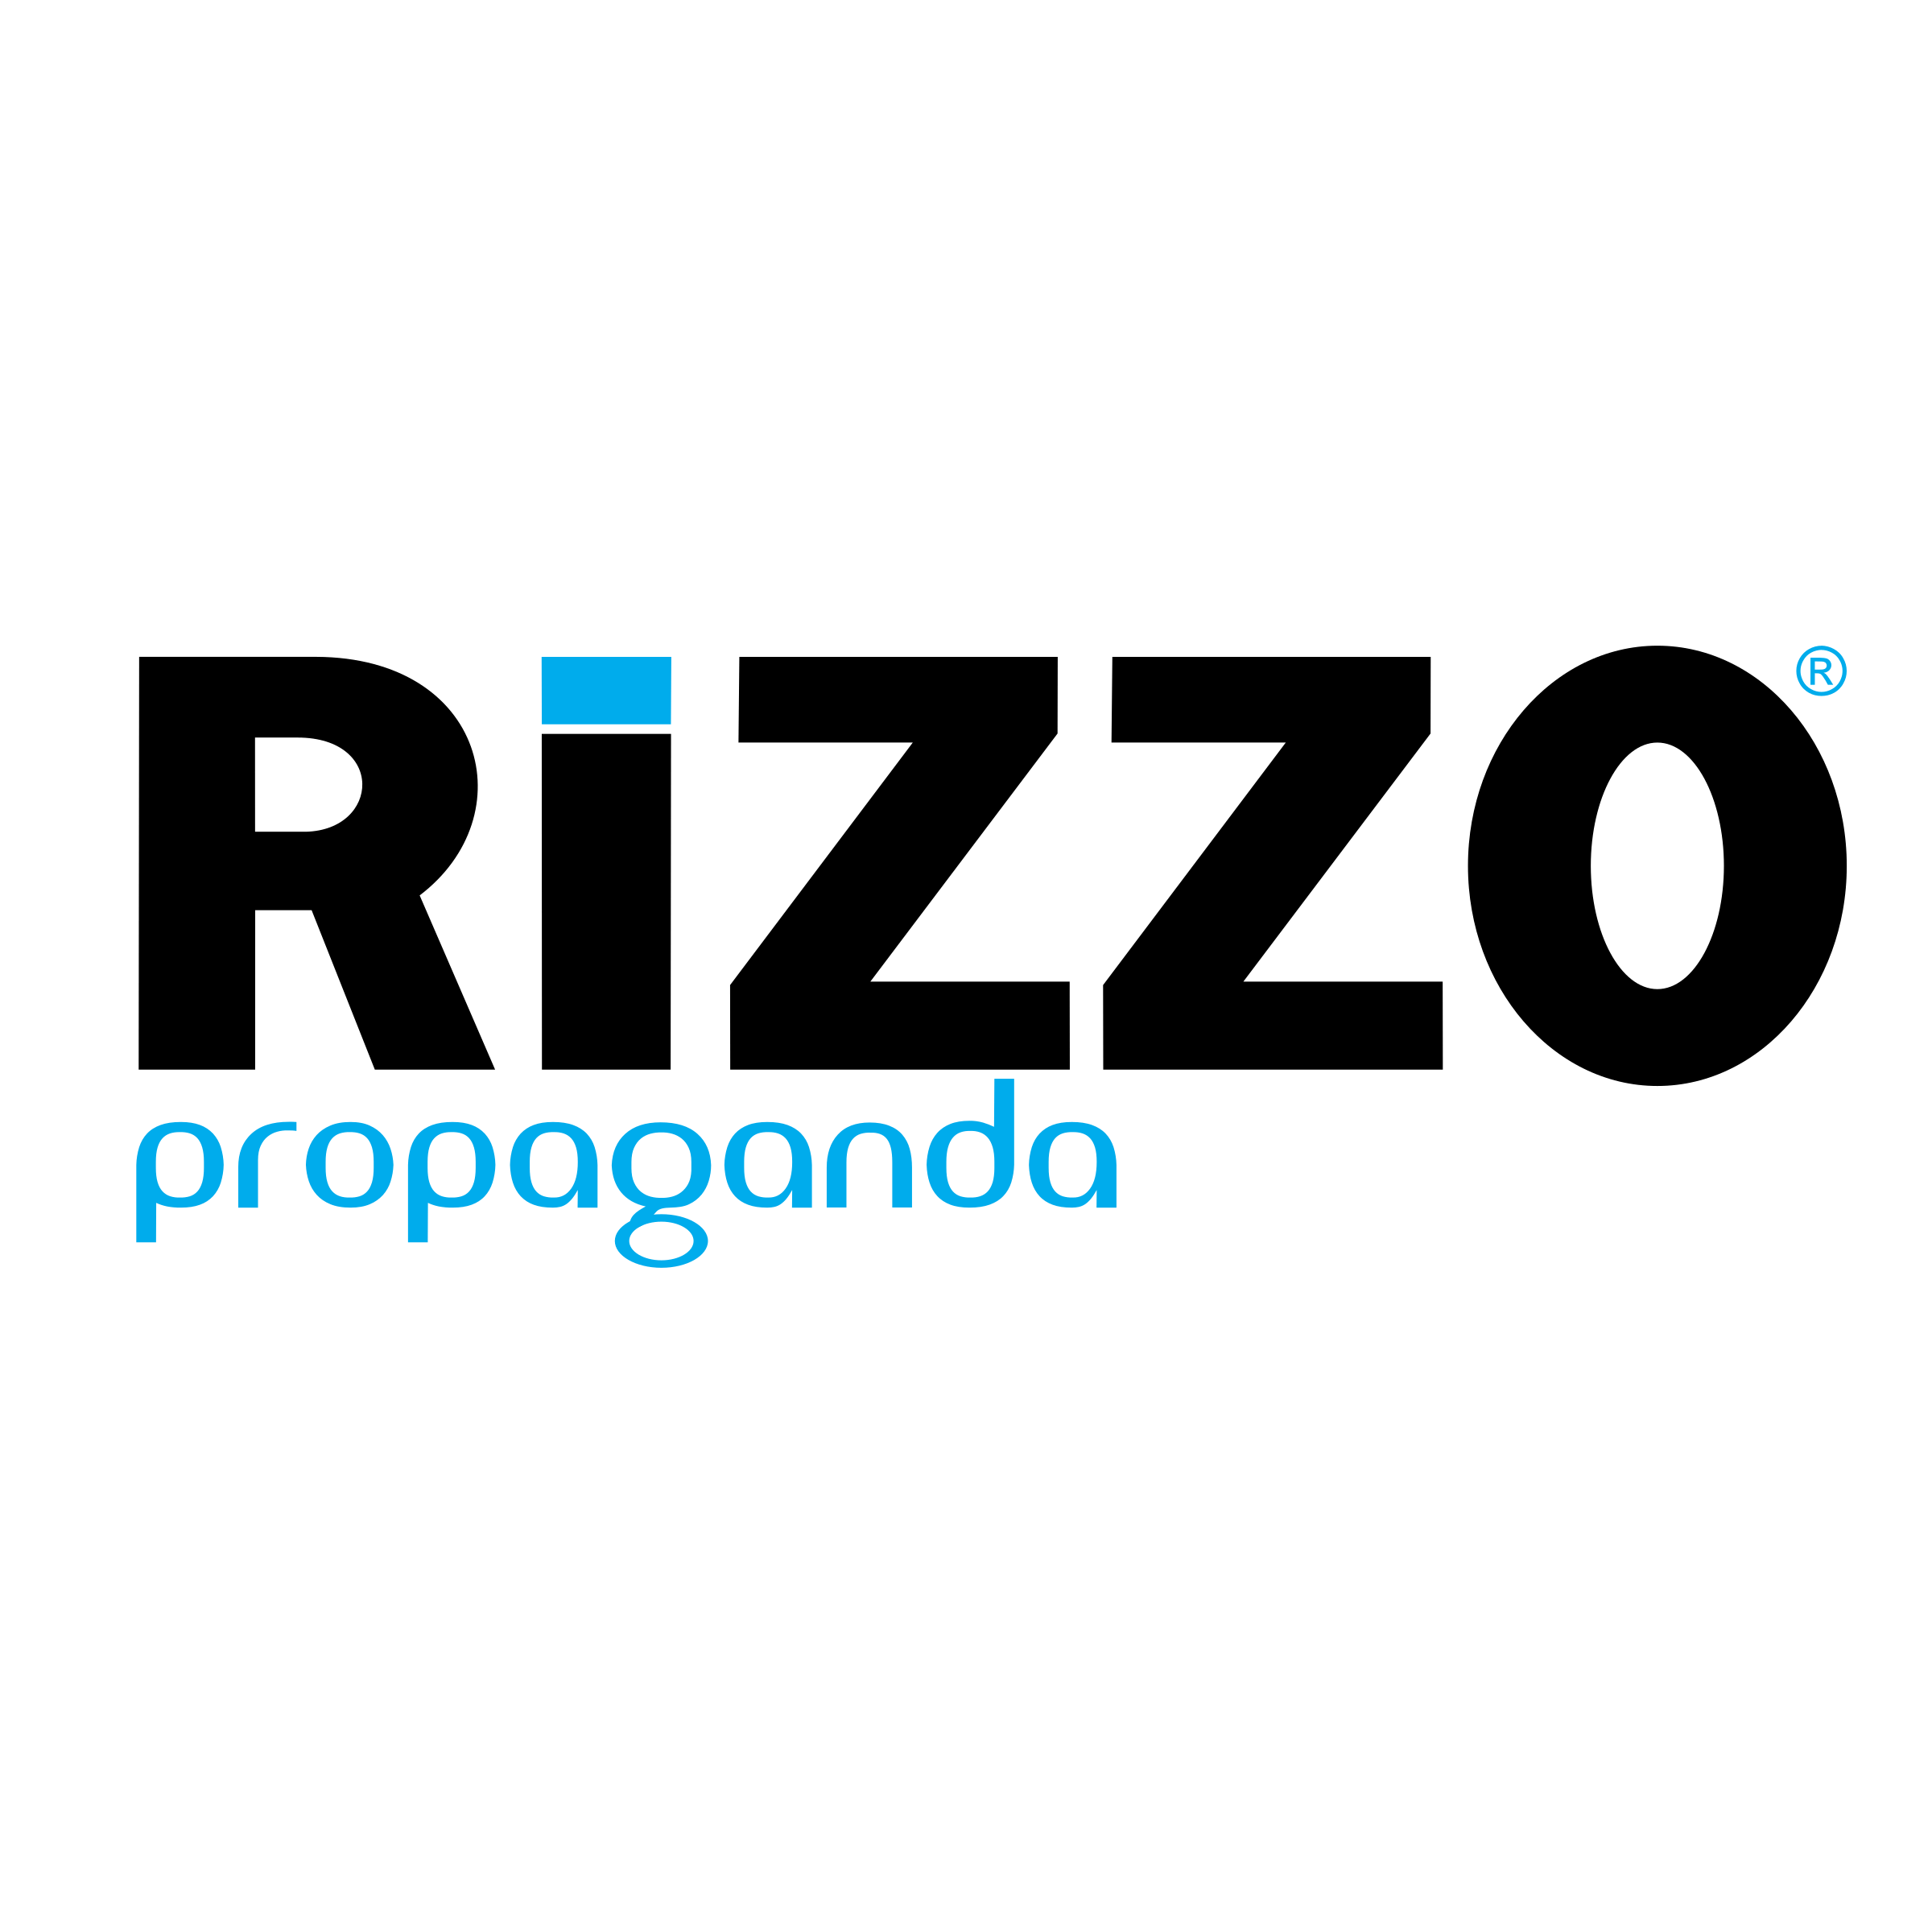 Propaganda Logo - Rizzo Propaganda Logo PNG Transparent & SVG Vector - Freebie Supply